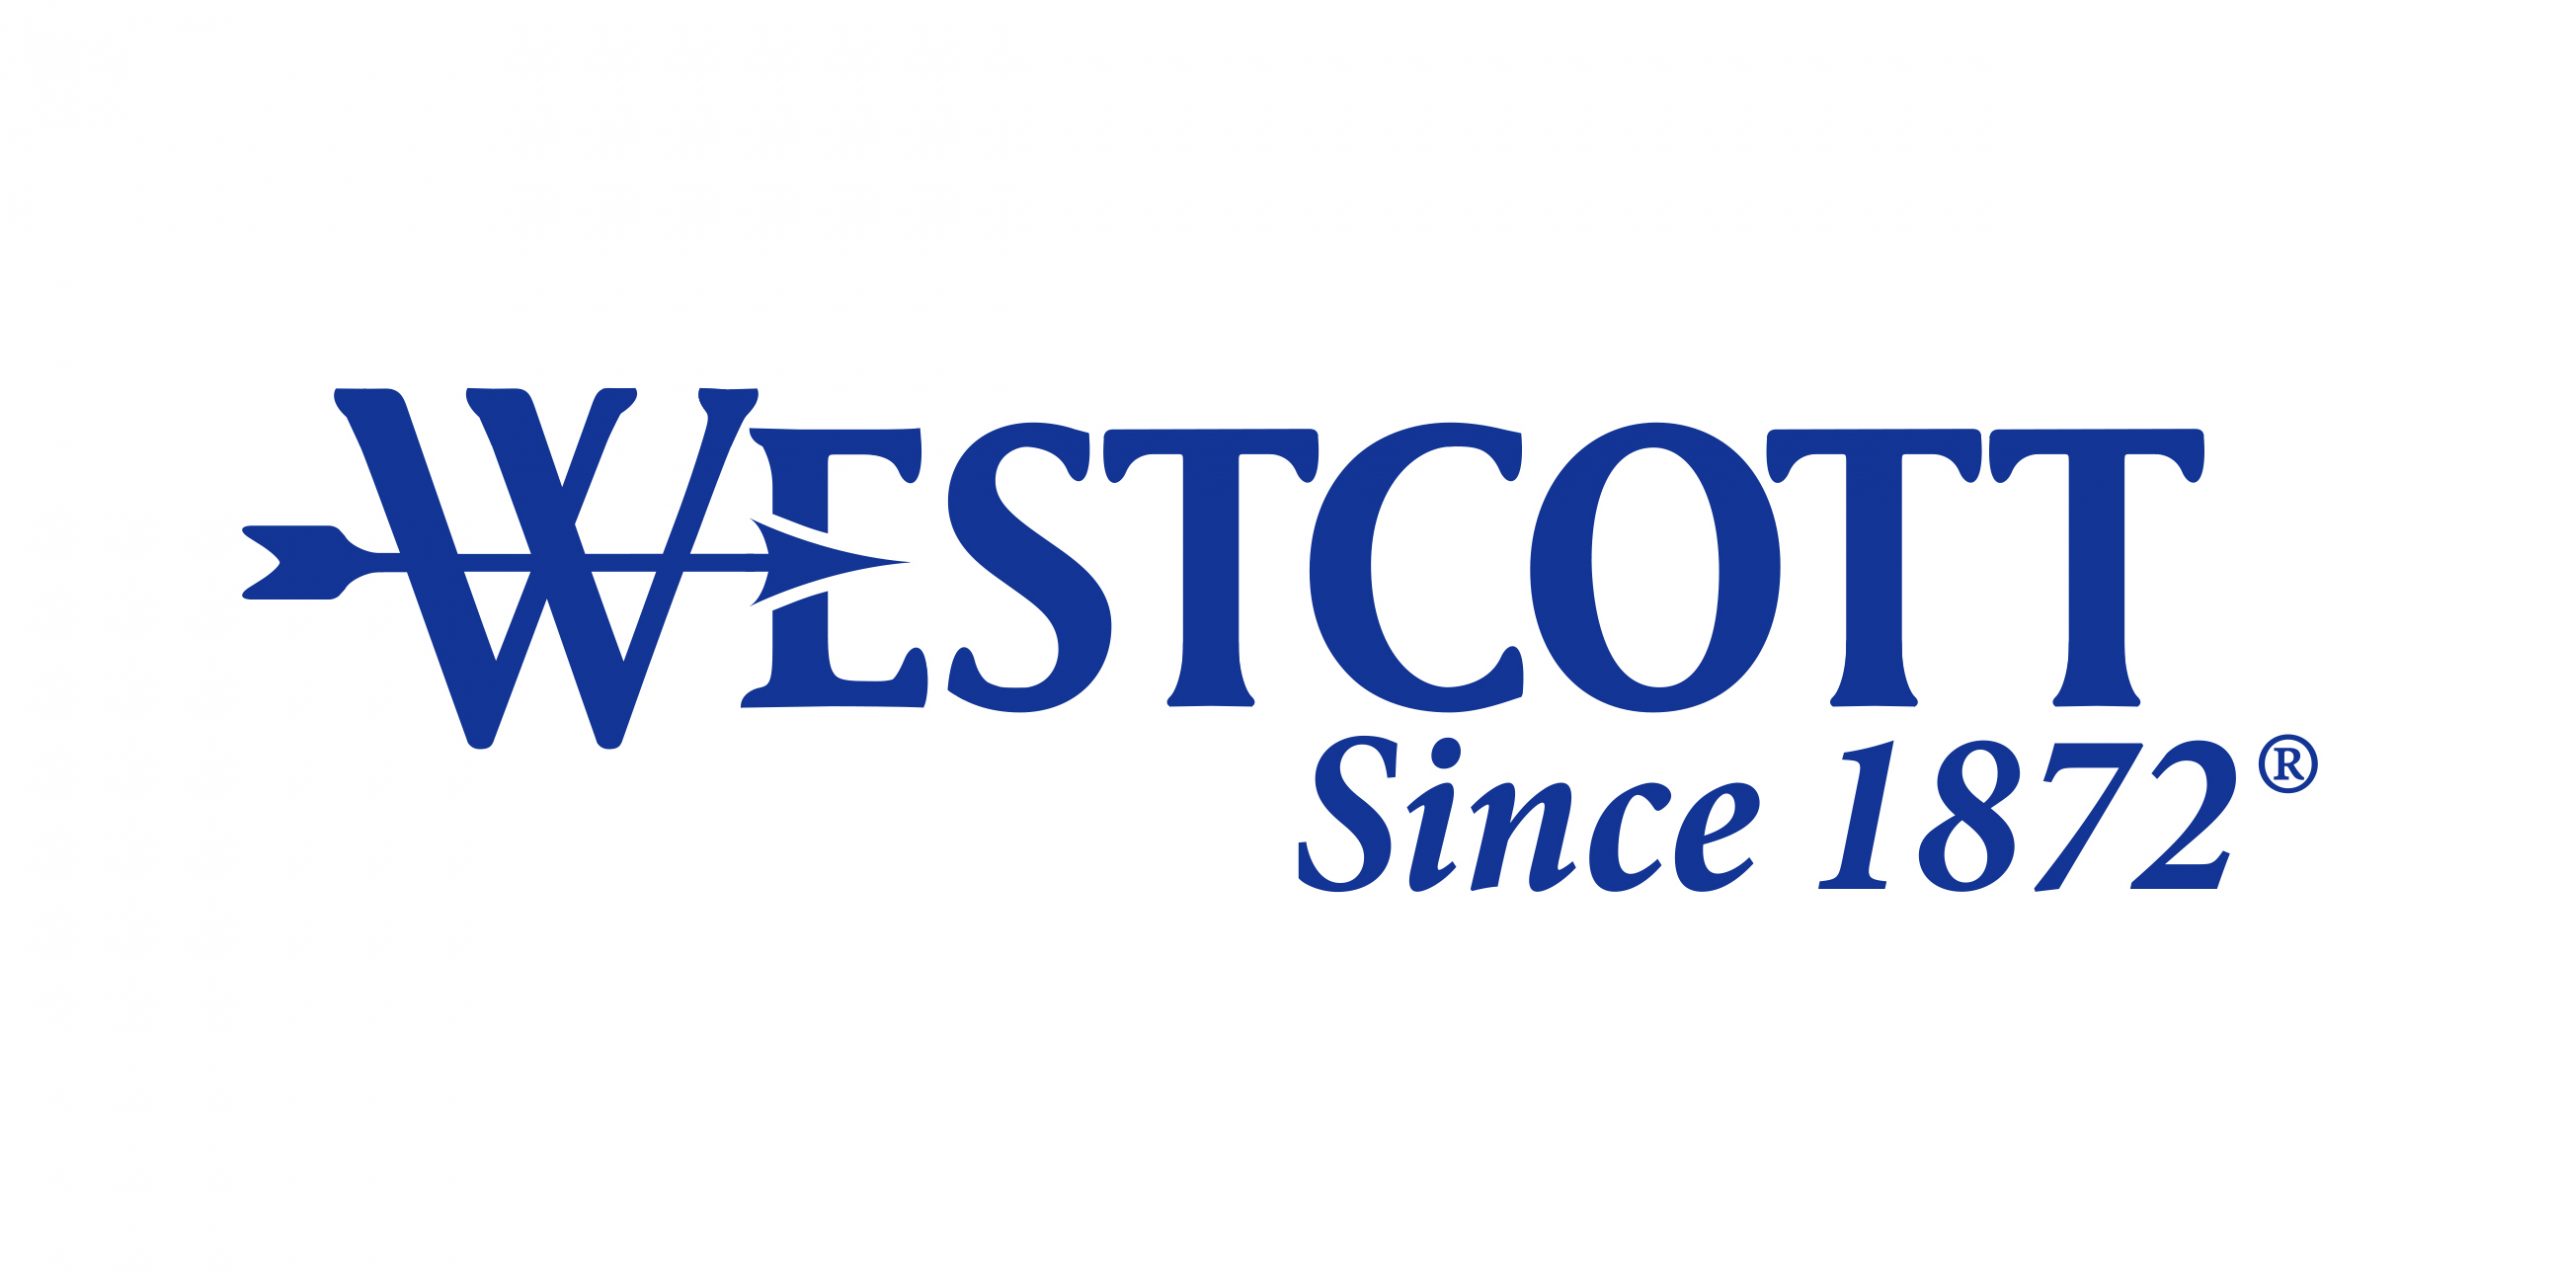 Westcott® Three Pack Value Pack Scissors - Sam's Club